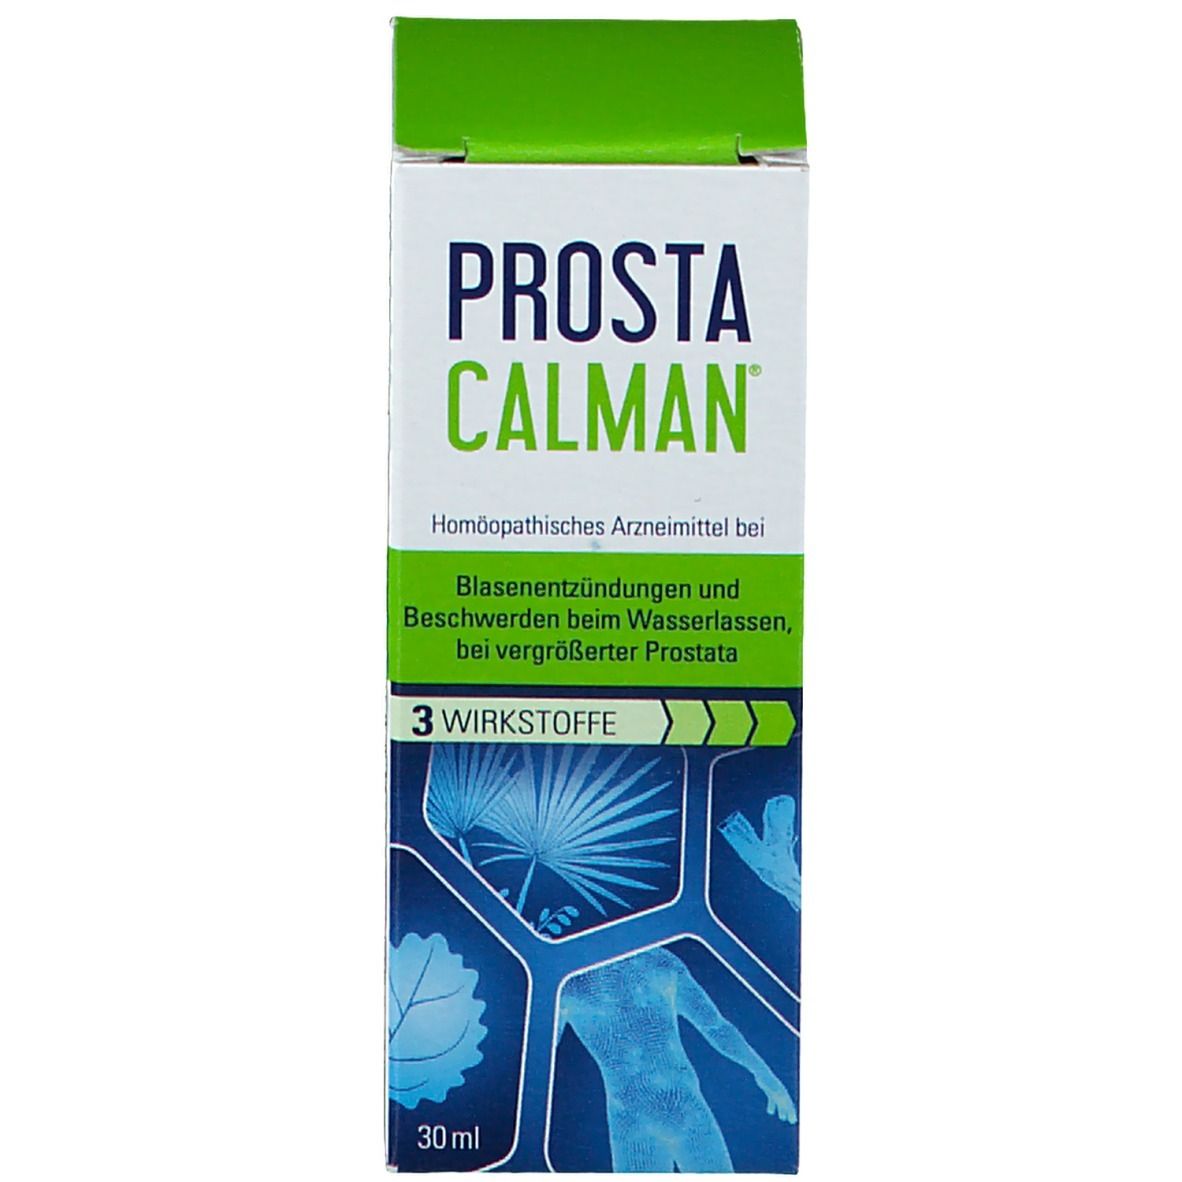 Prostcalman®